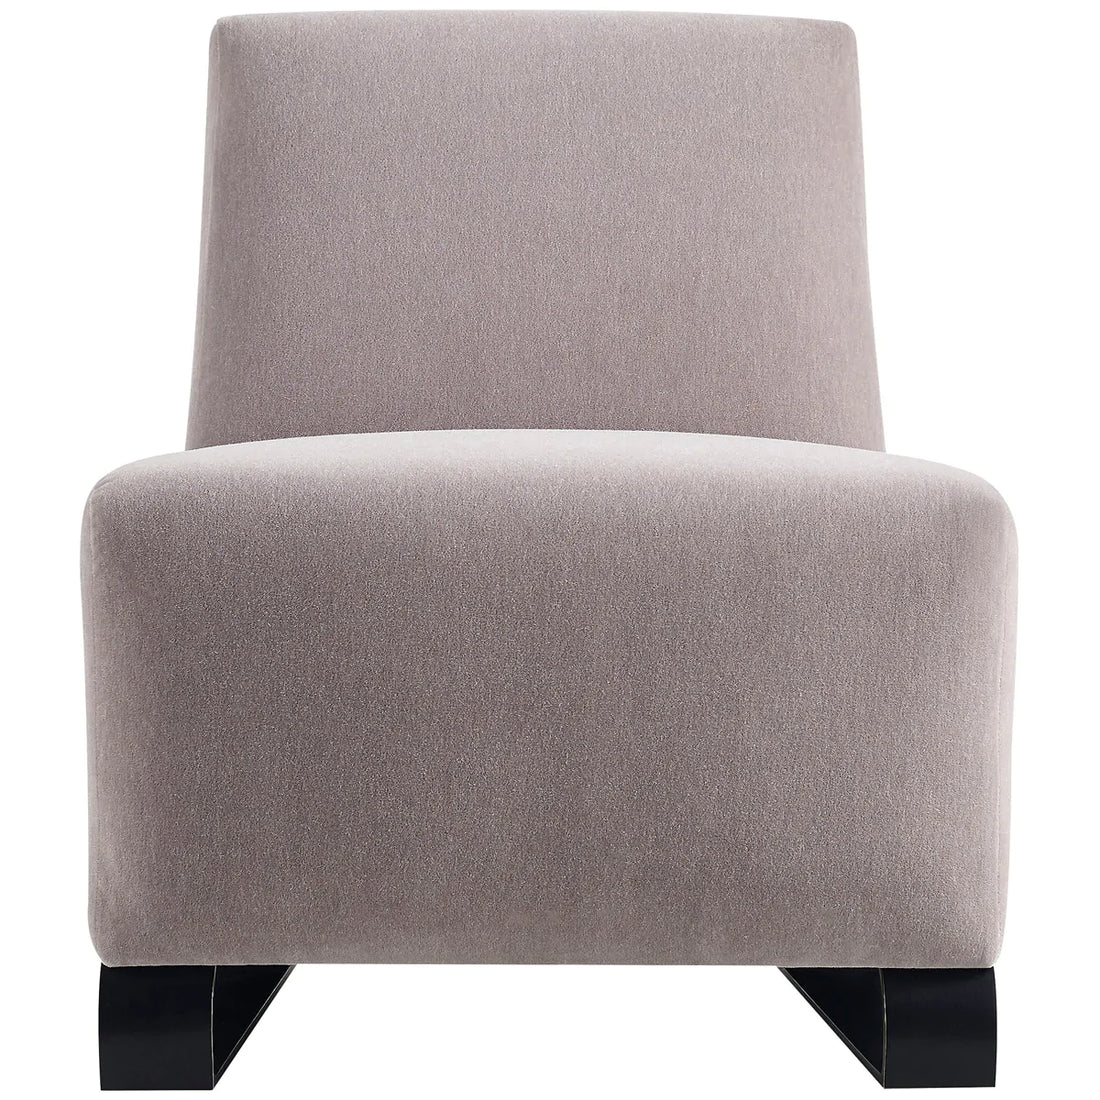 Baker Furniture Sleigh Lounge Chair BAA4005C